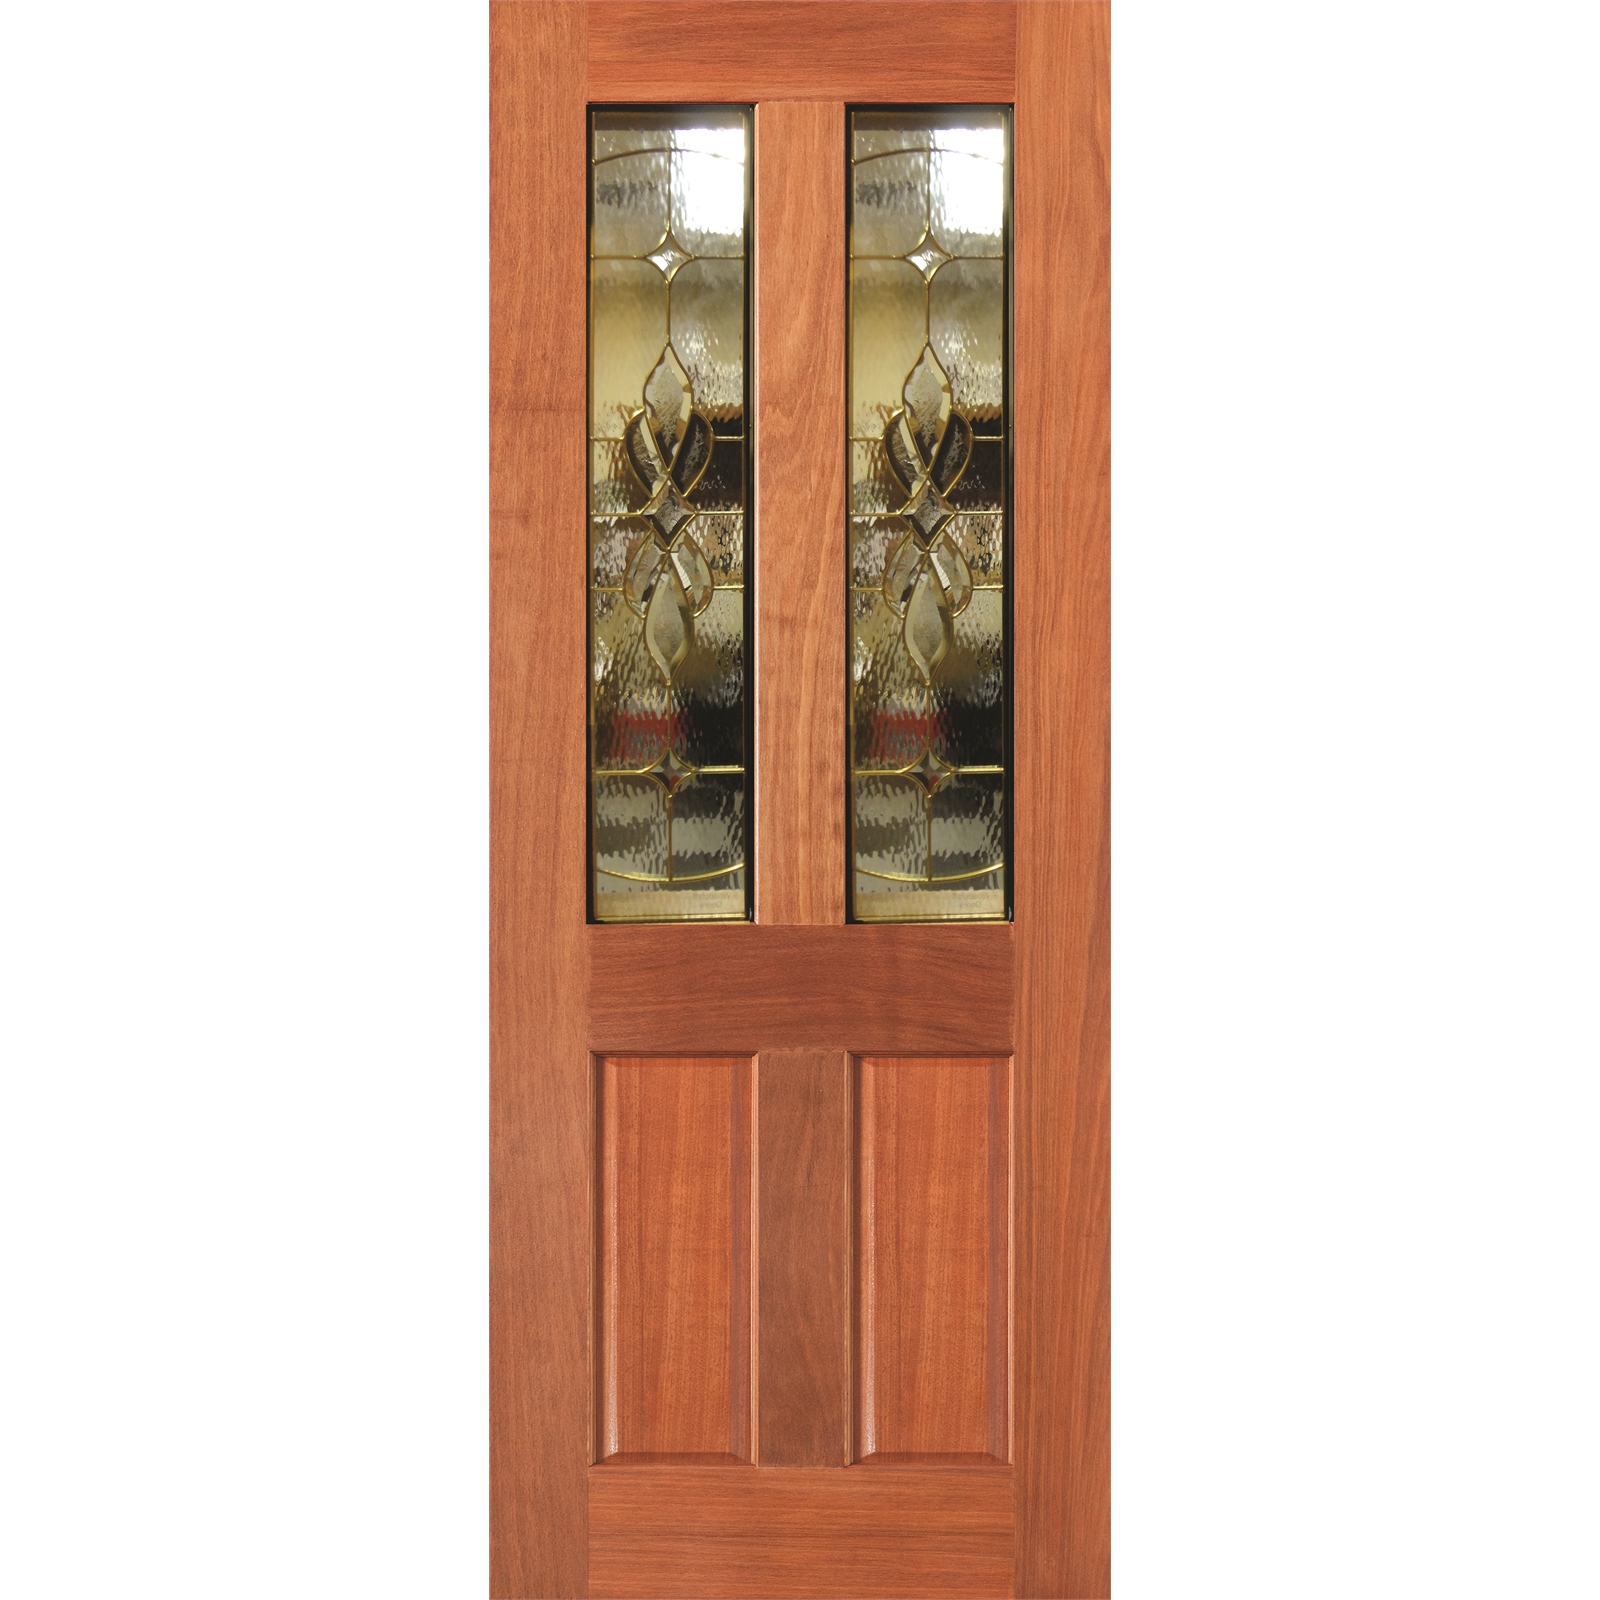 Woodcraft Doors 2040 x 820 x 40mm Bevelled Cass Entrance Door